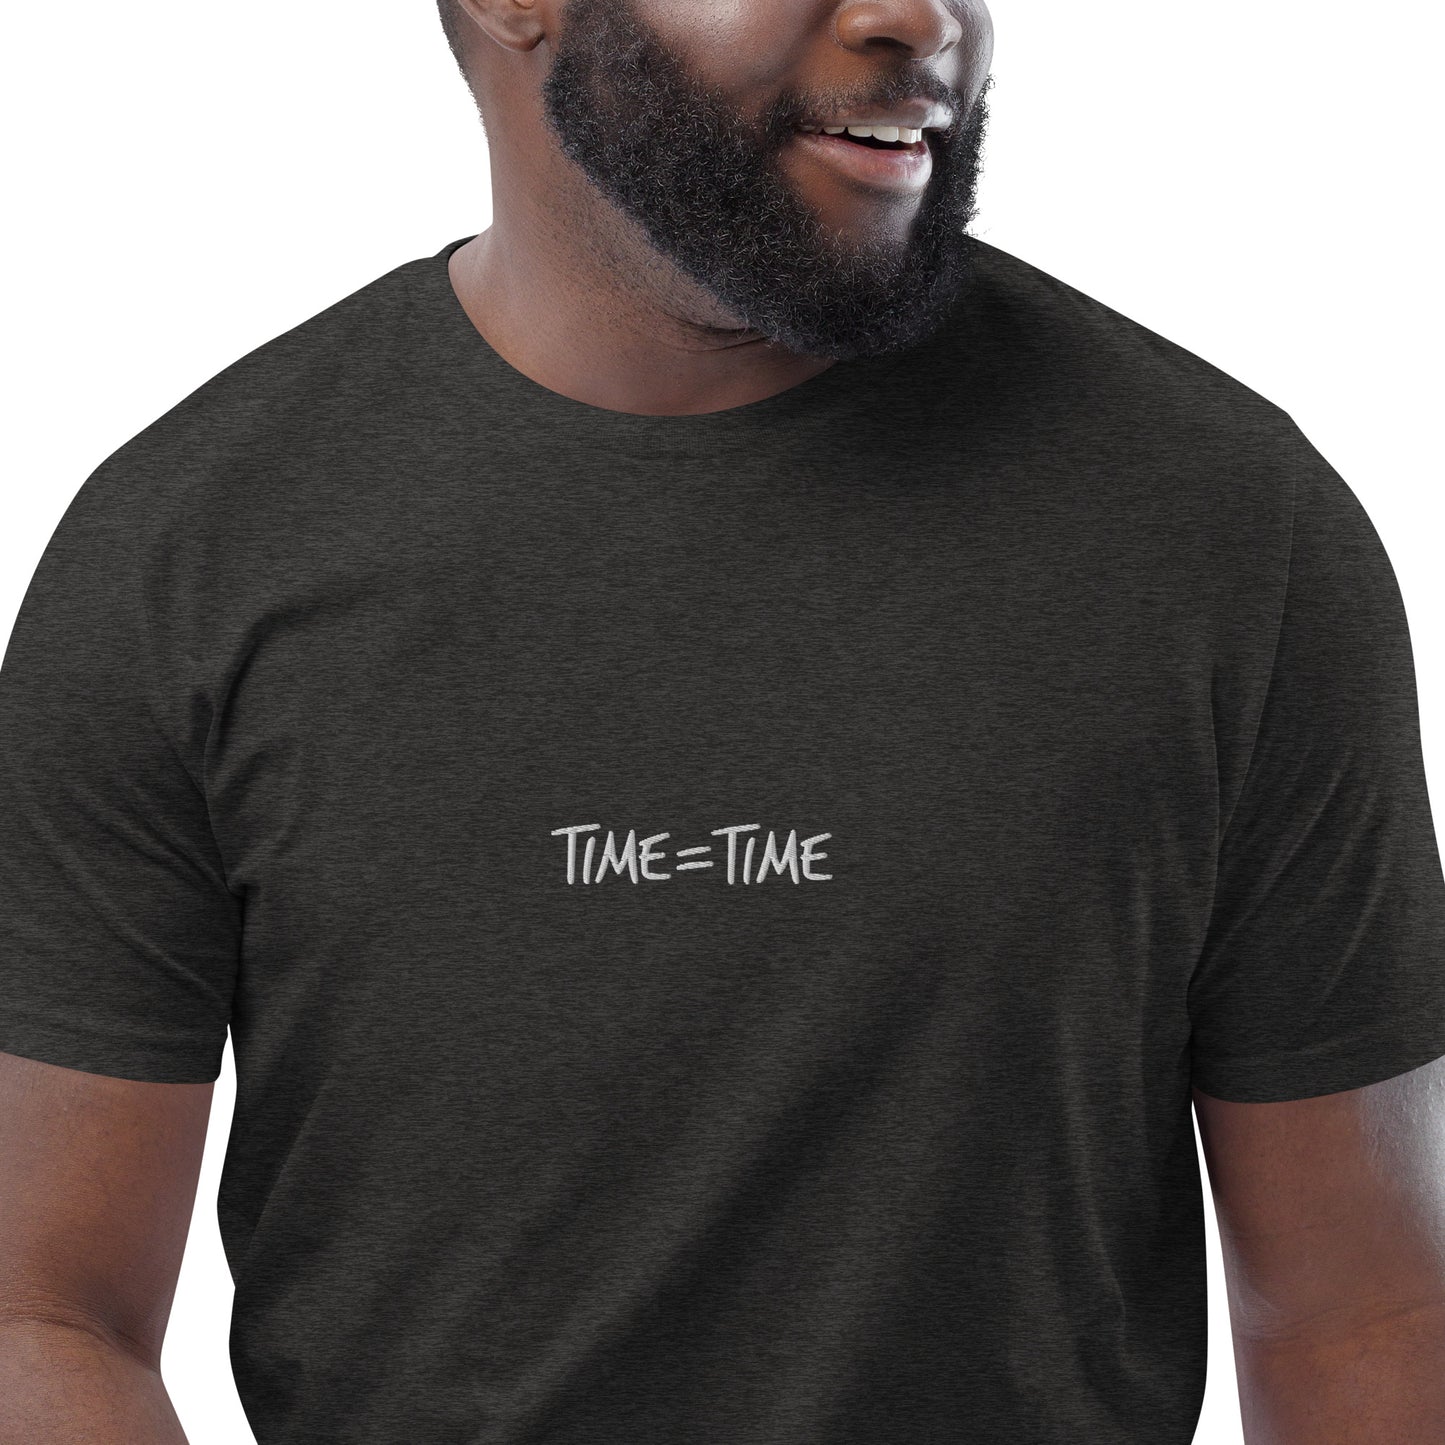 "Time = Time" organic cotton t-shirt